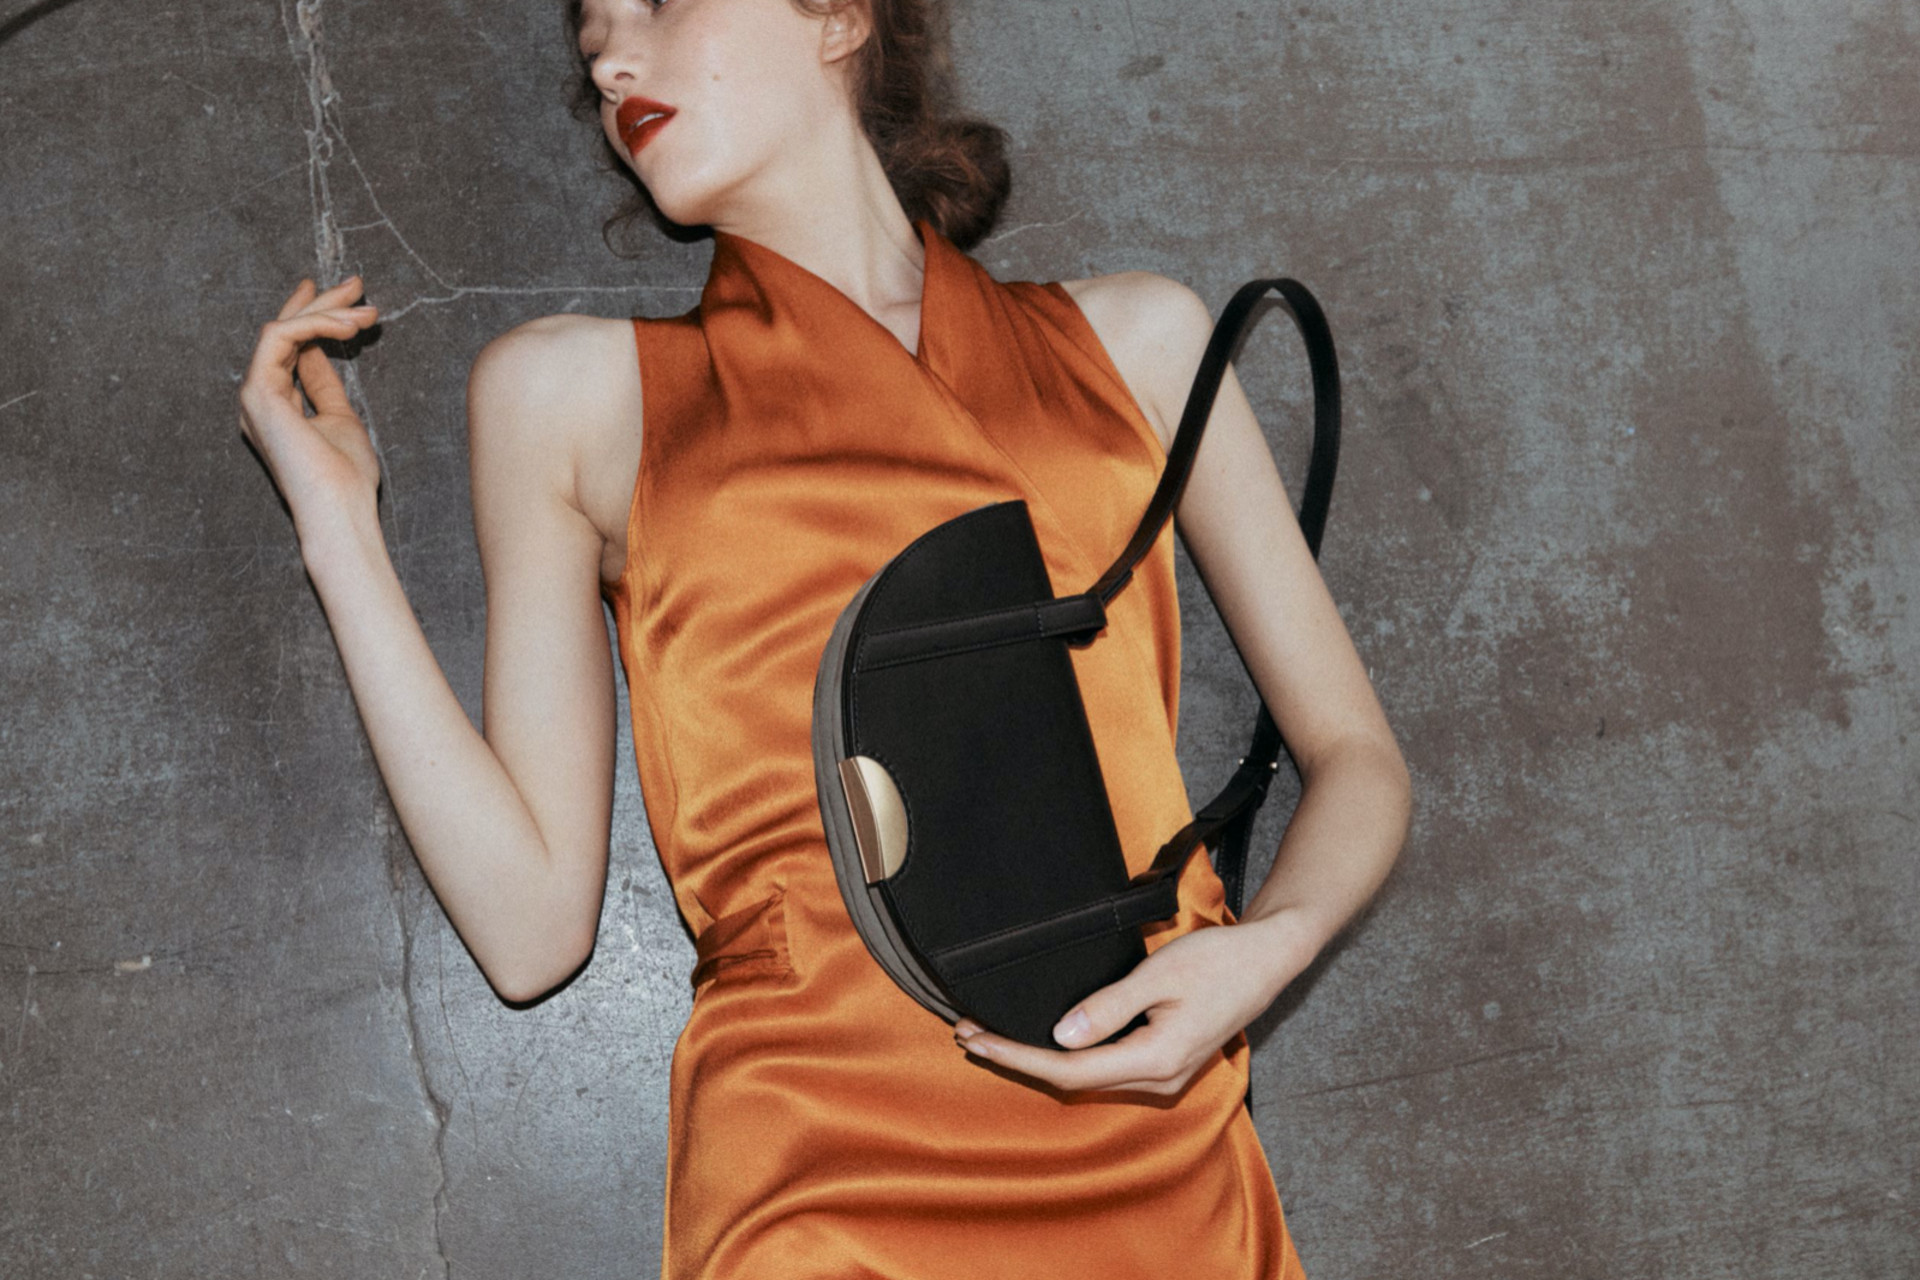 What kind of people buy luxury designer handbags? - Quora